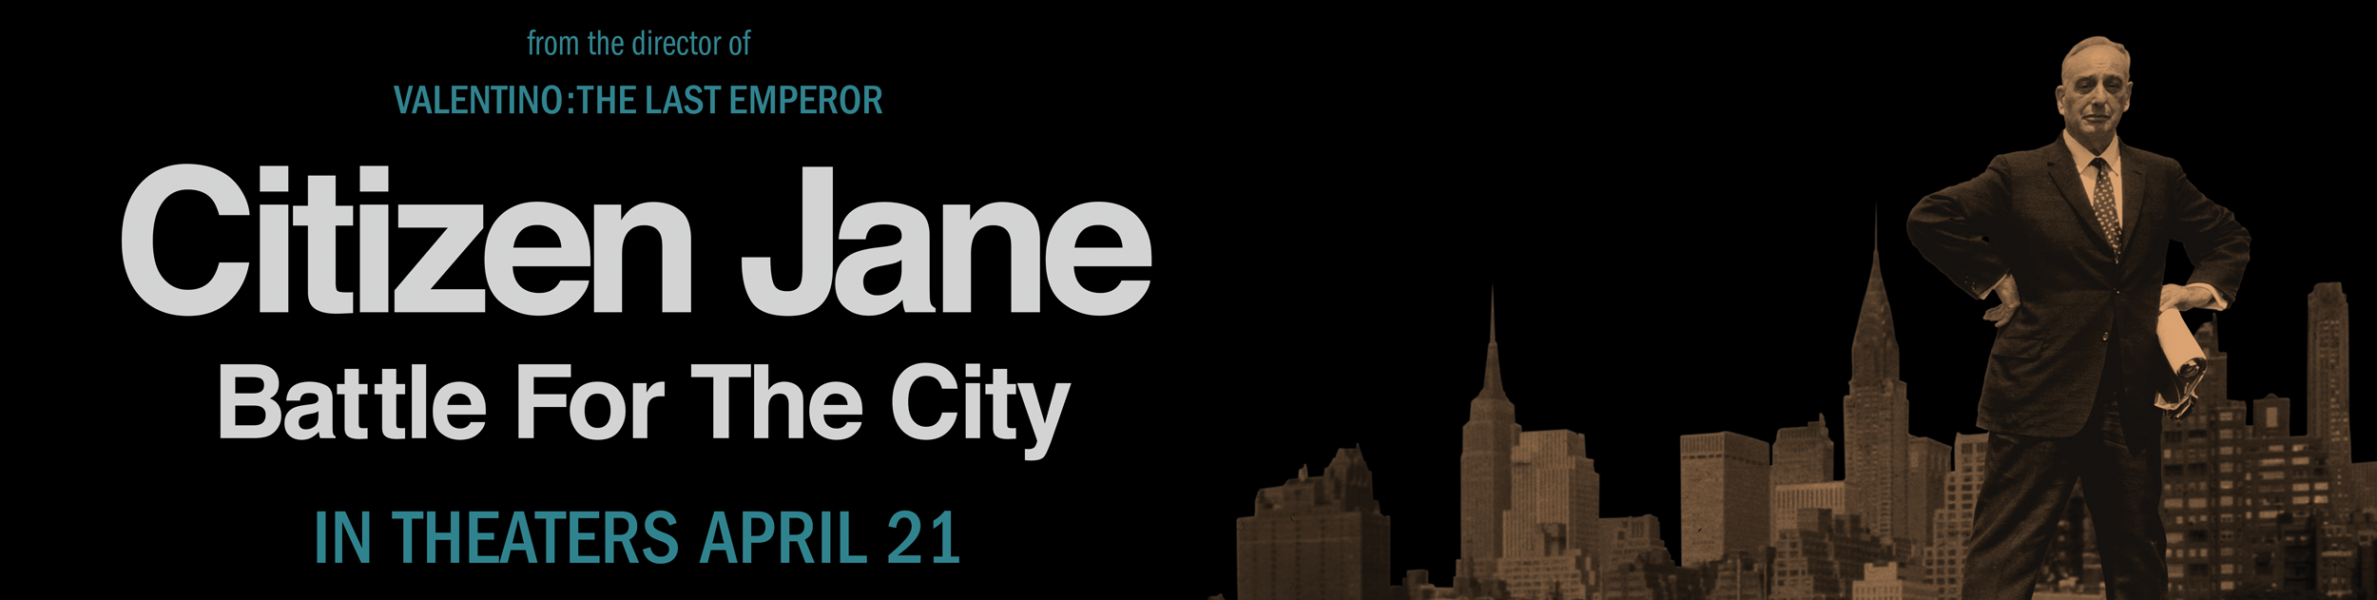 REVIEW: CITIZEN JANE - BATTLE FOR THE CITY